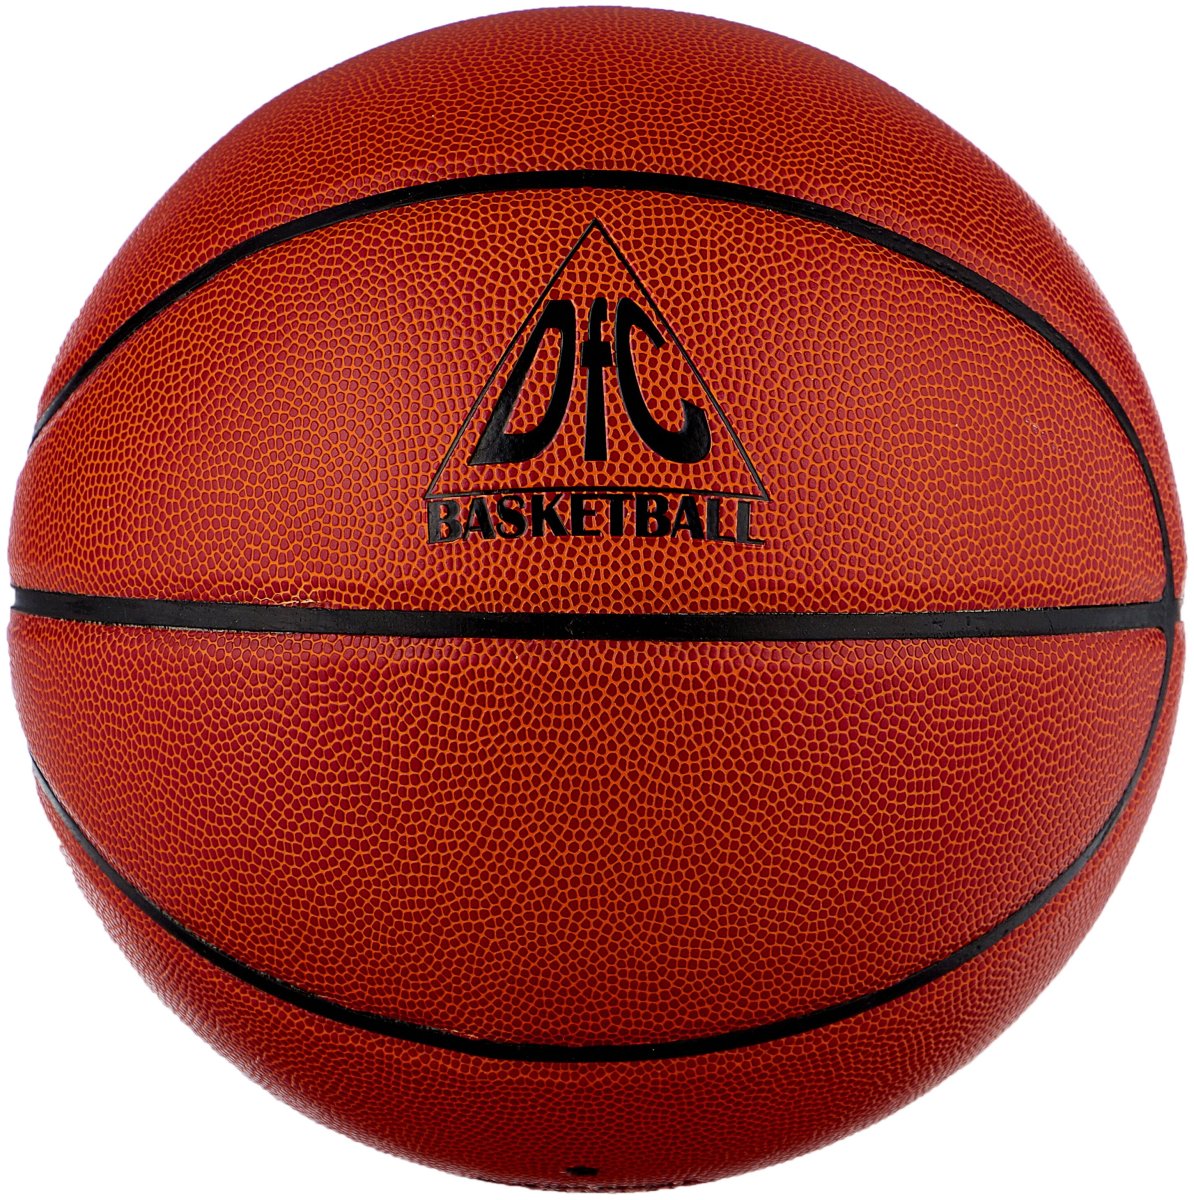 Баскетбольный мяч DFC ball7p, р. 7